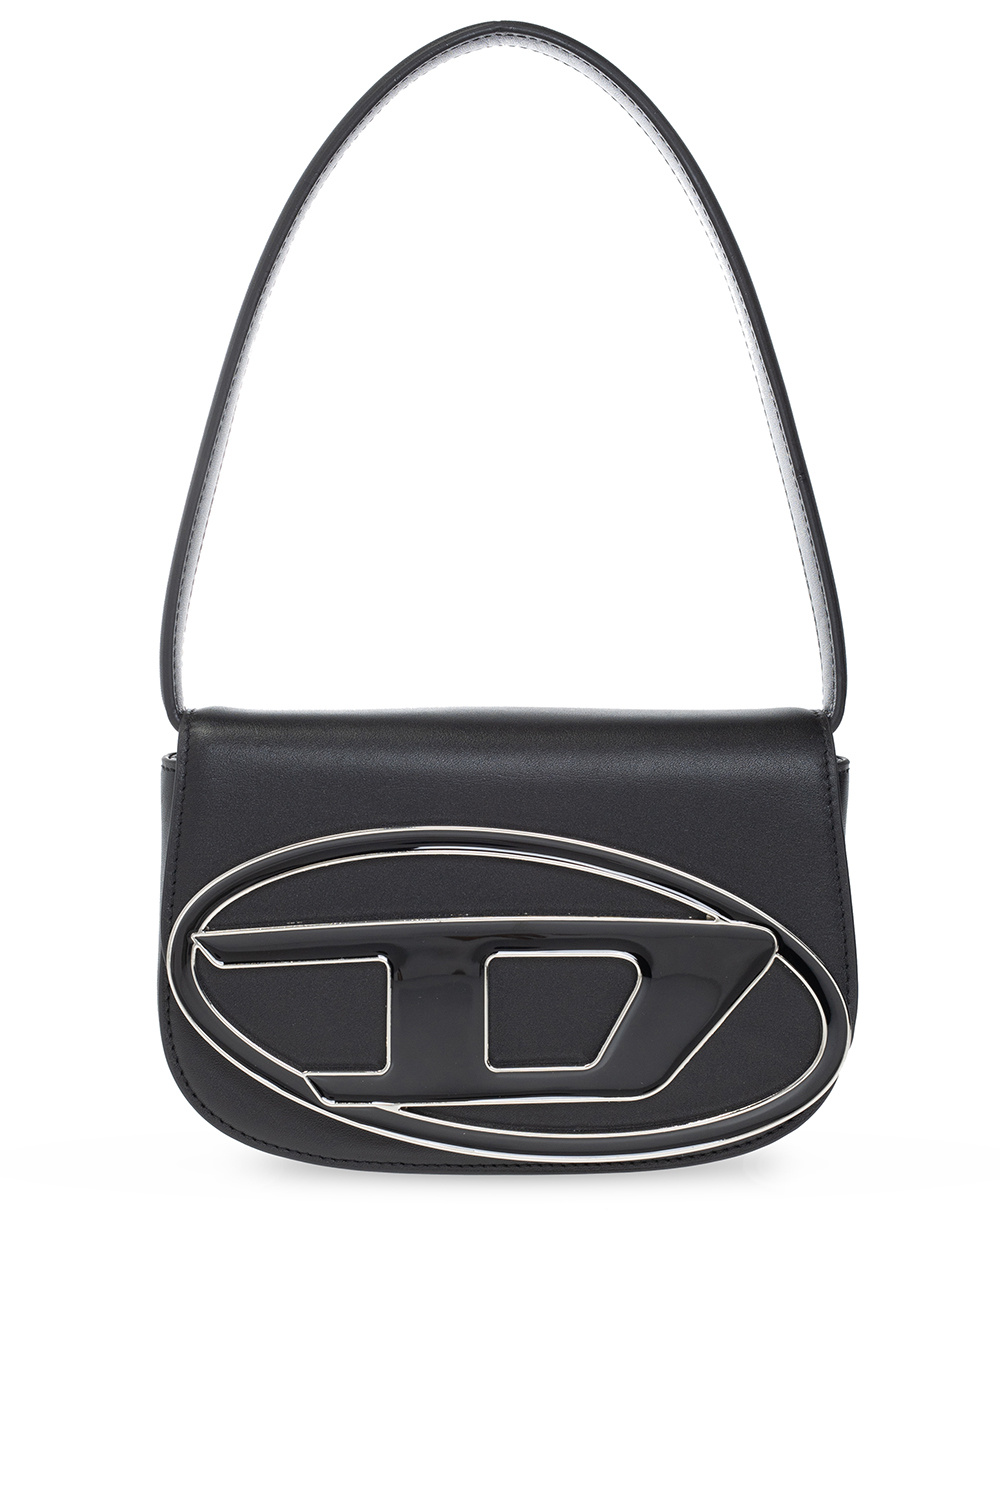 IetpShops | Diesel '1DR' shoulder bag | Women's Bags | Crossbody 